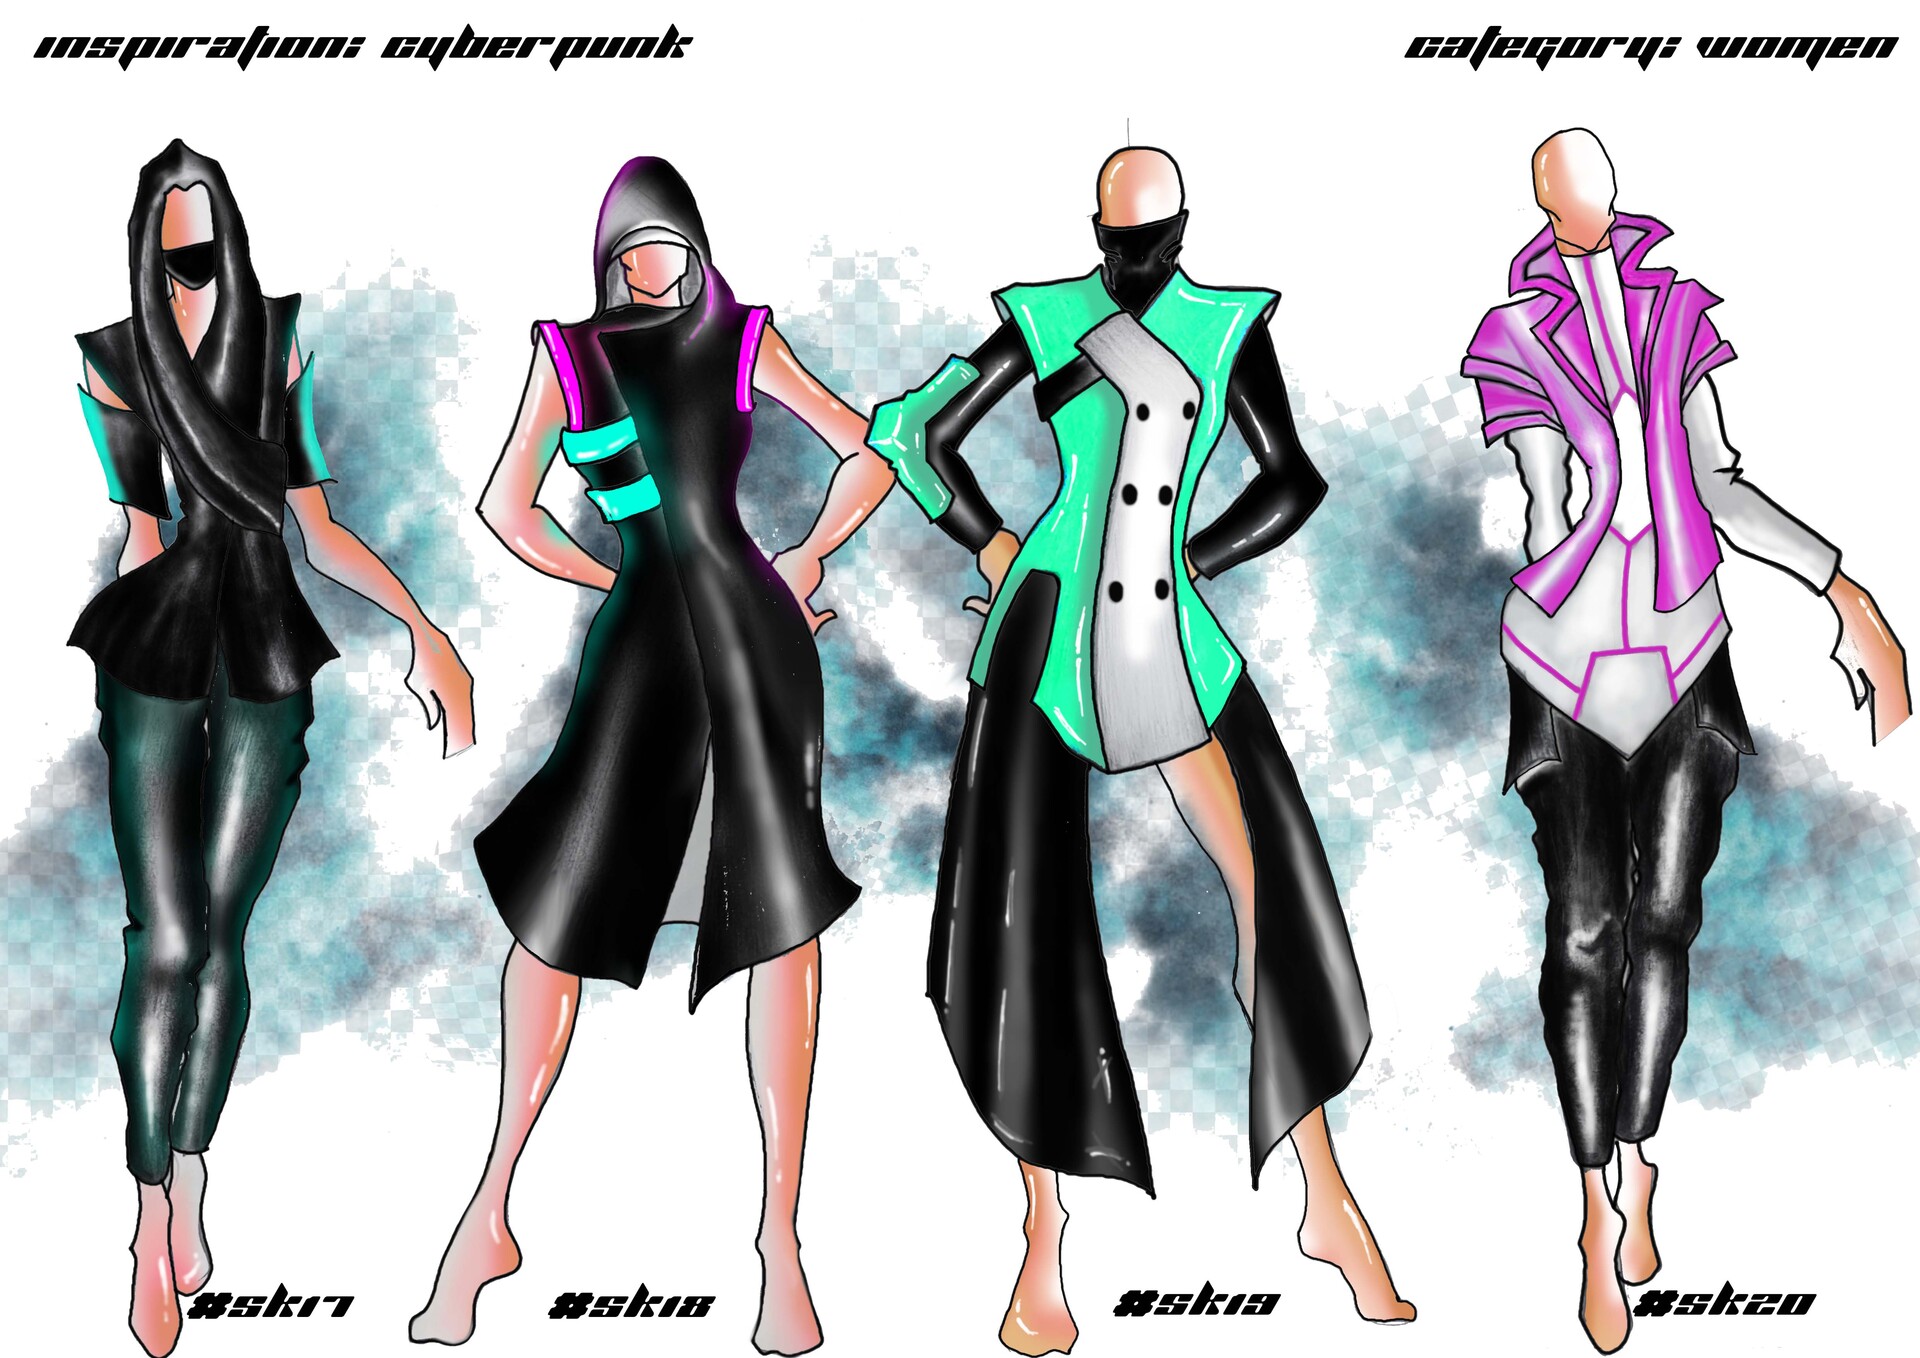 Futuristic Fashion  Futuristic fashion, Future fashion, Cyberpunk fashion